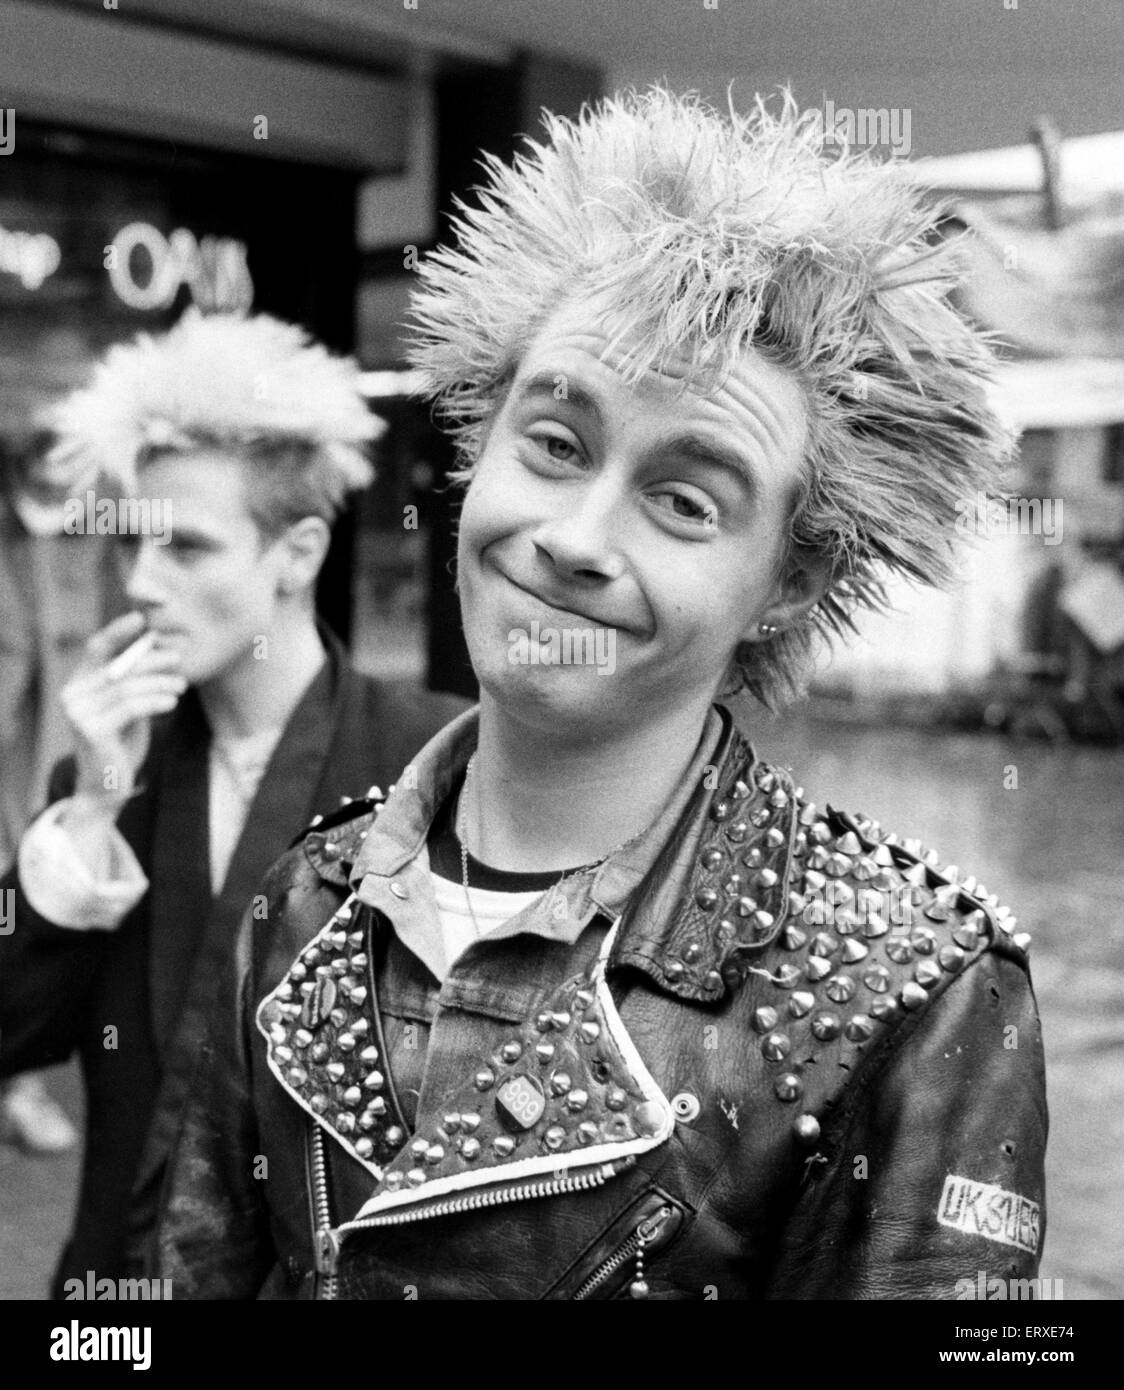 19 year old Punk Rocker Lee Cumiskey, in Birmingham, 27th March 1983. Stock Photo